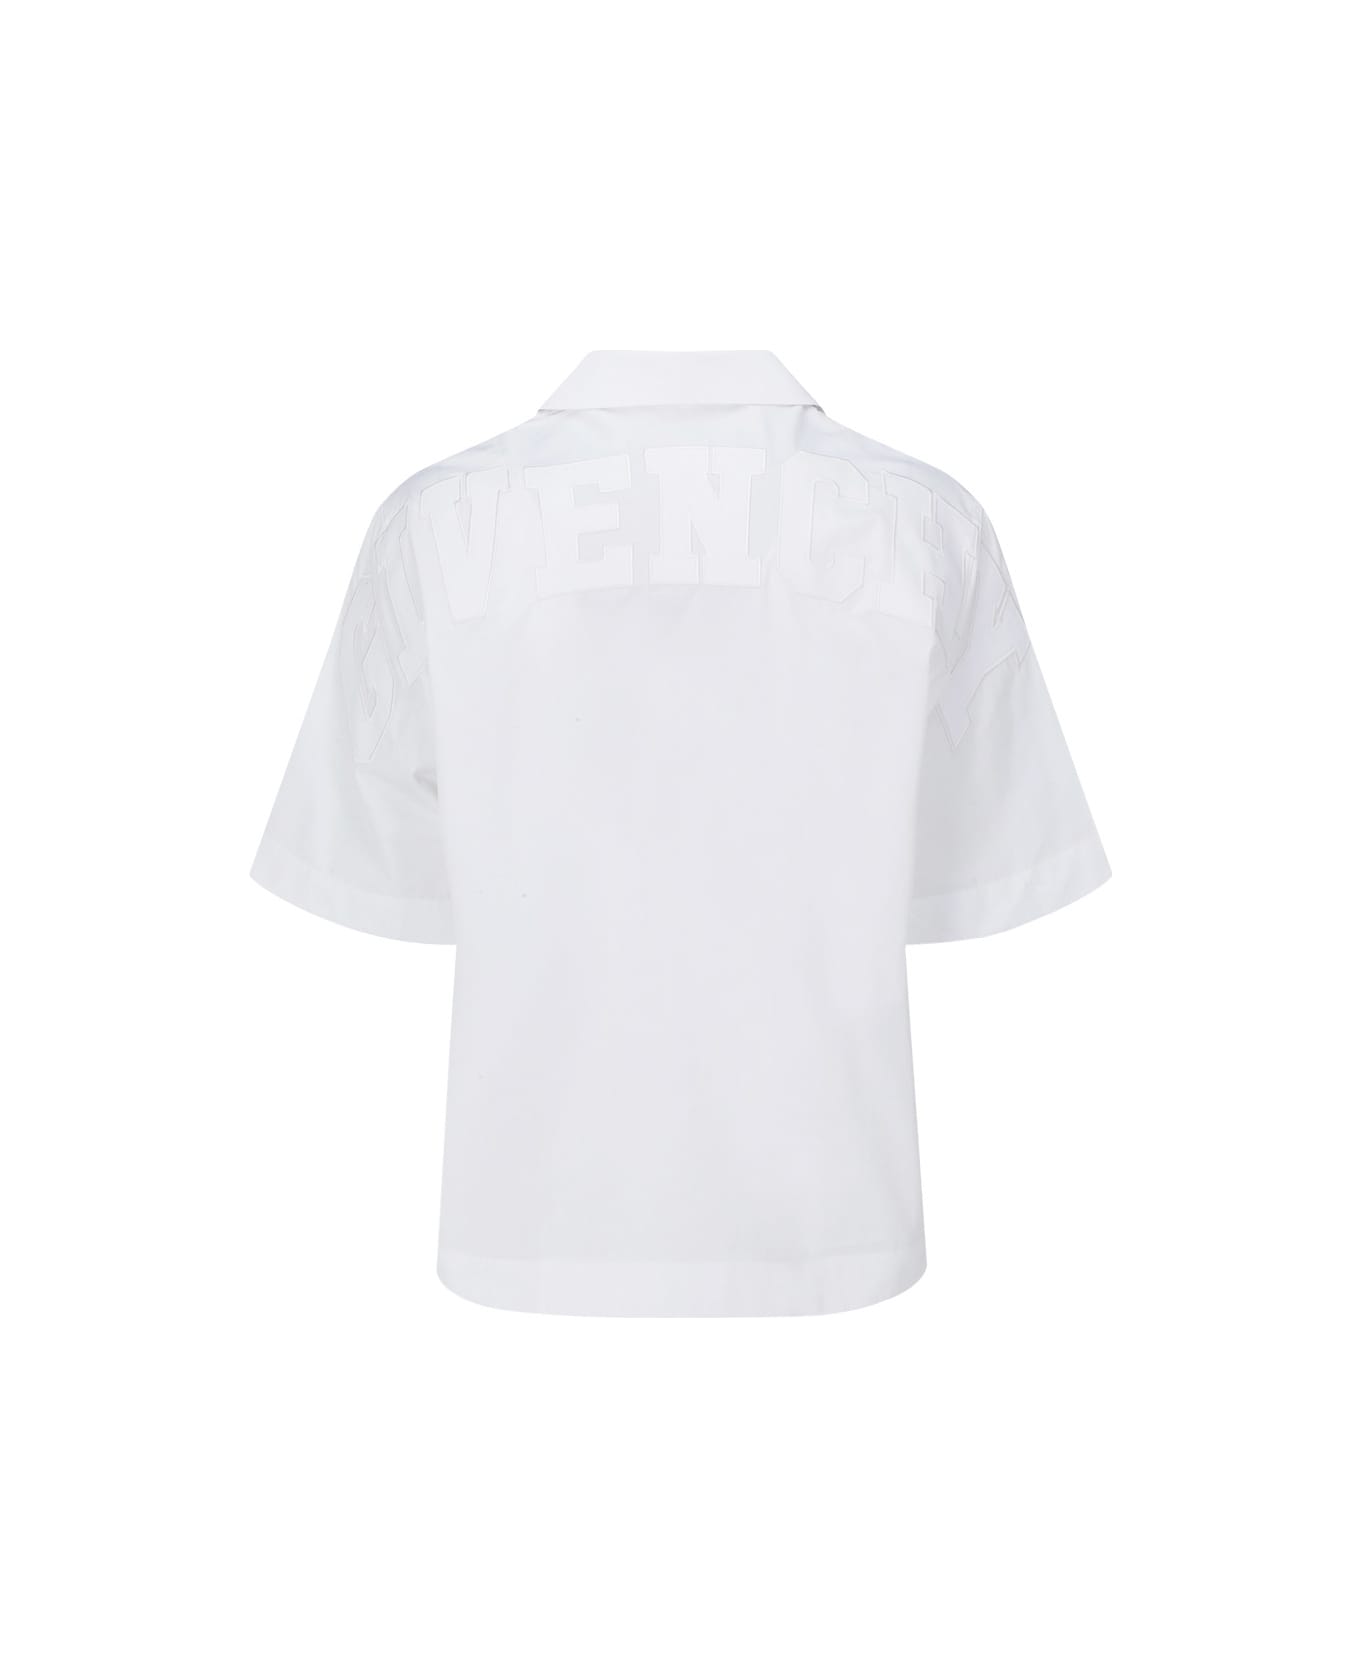 Givenchy Boxy Shirt - White